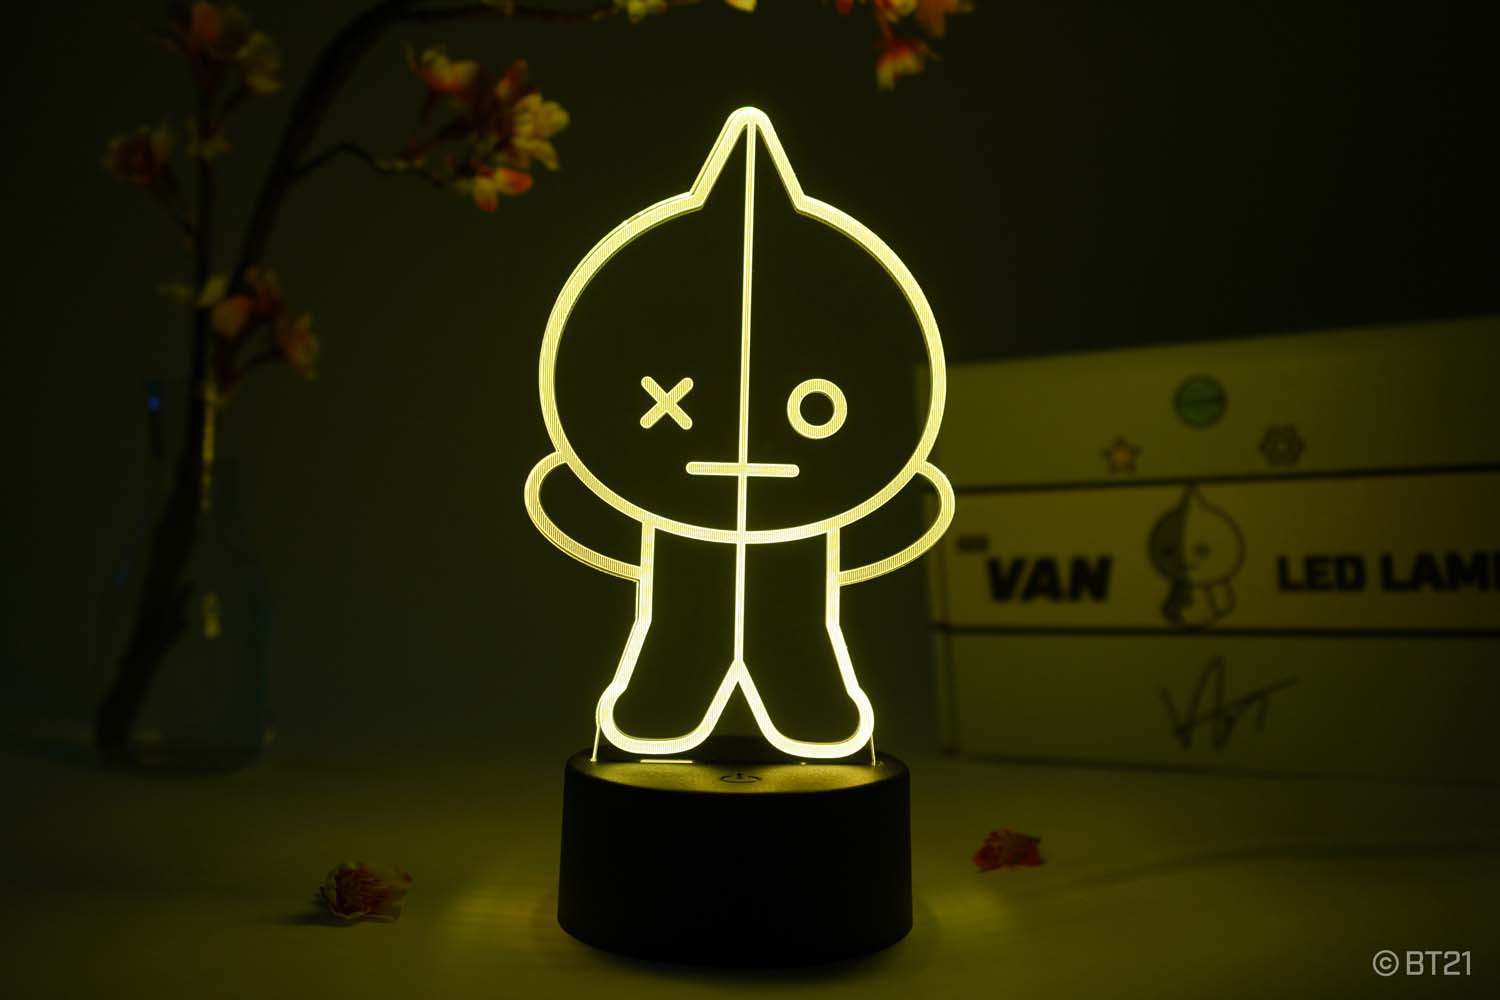 VAN LED LAMP (BT21)